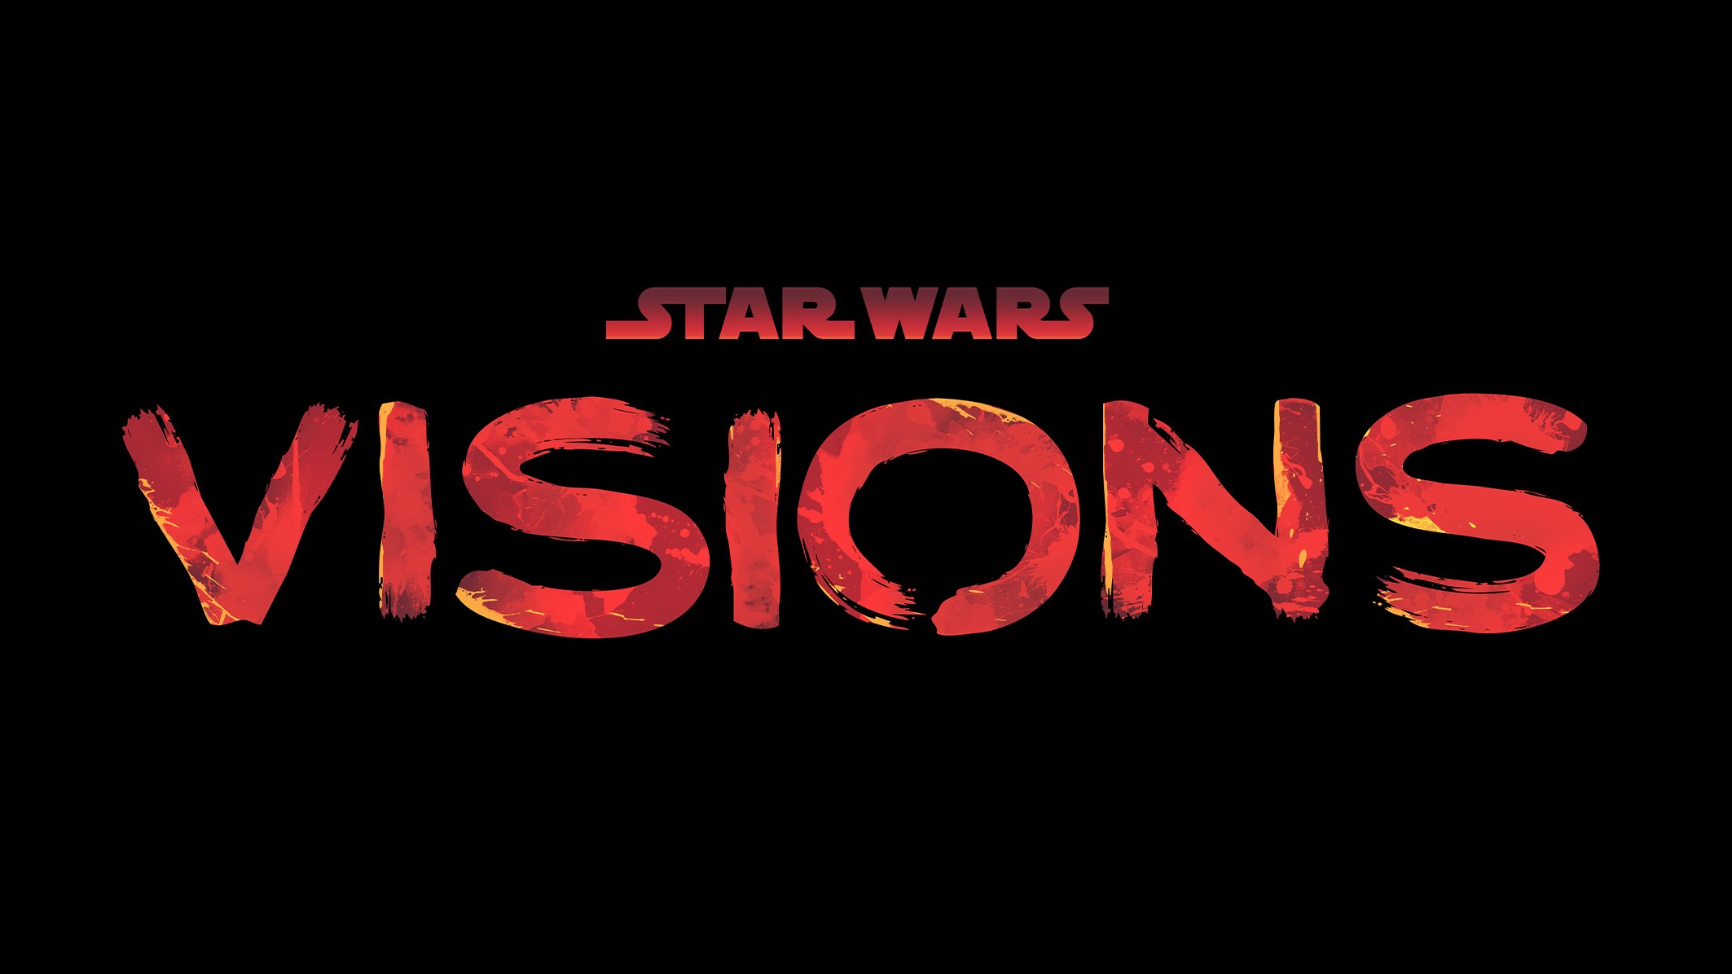 Star Wars: Visions - Volume 2